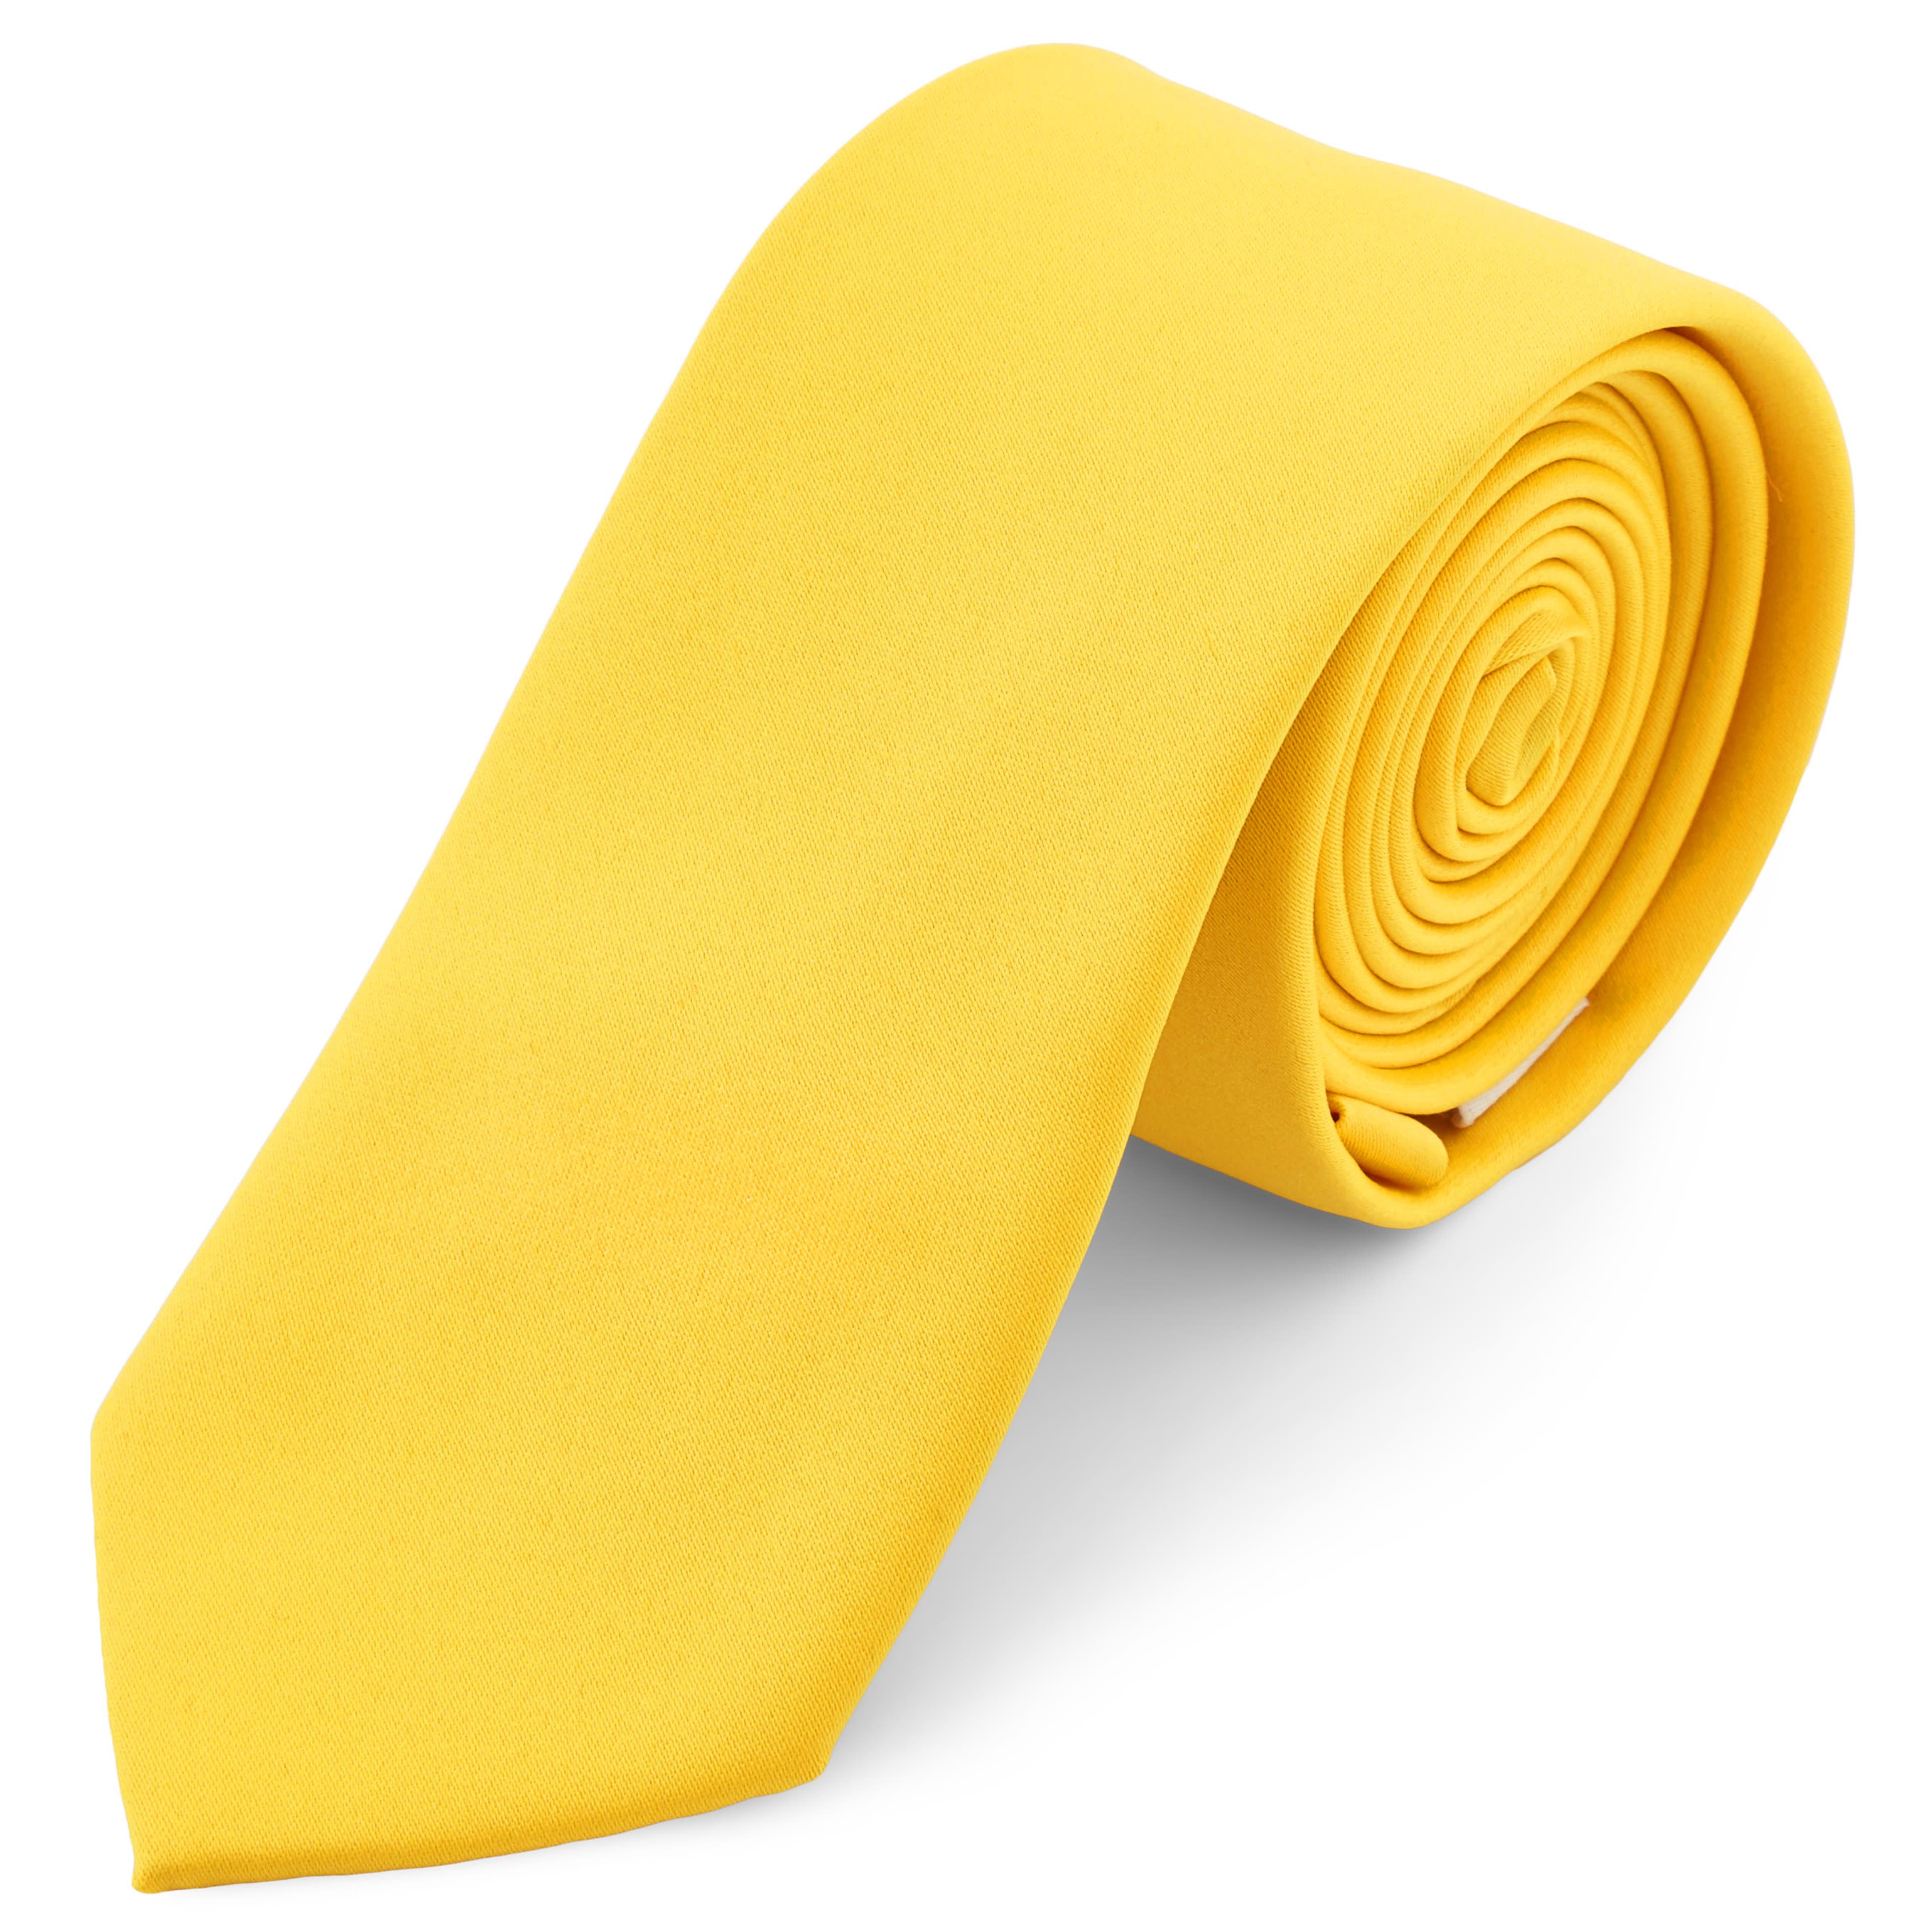 Cravate classique Terracotta - 6cm, En stock!